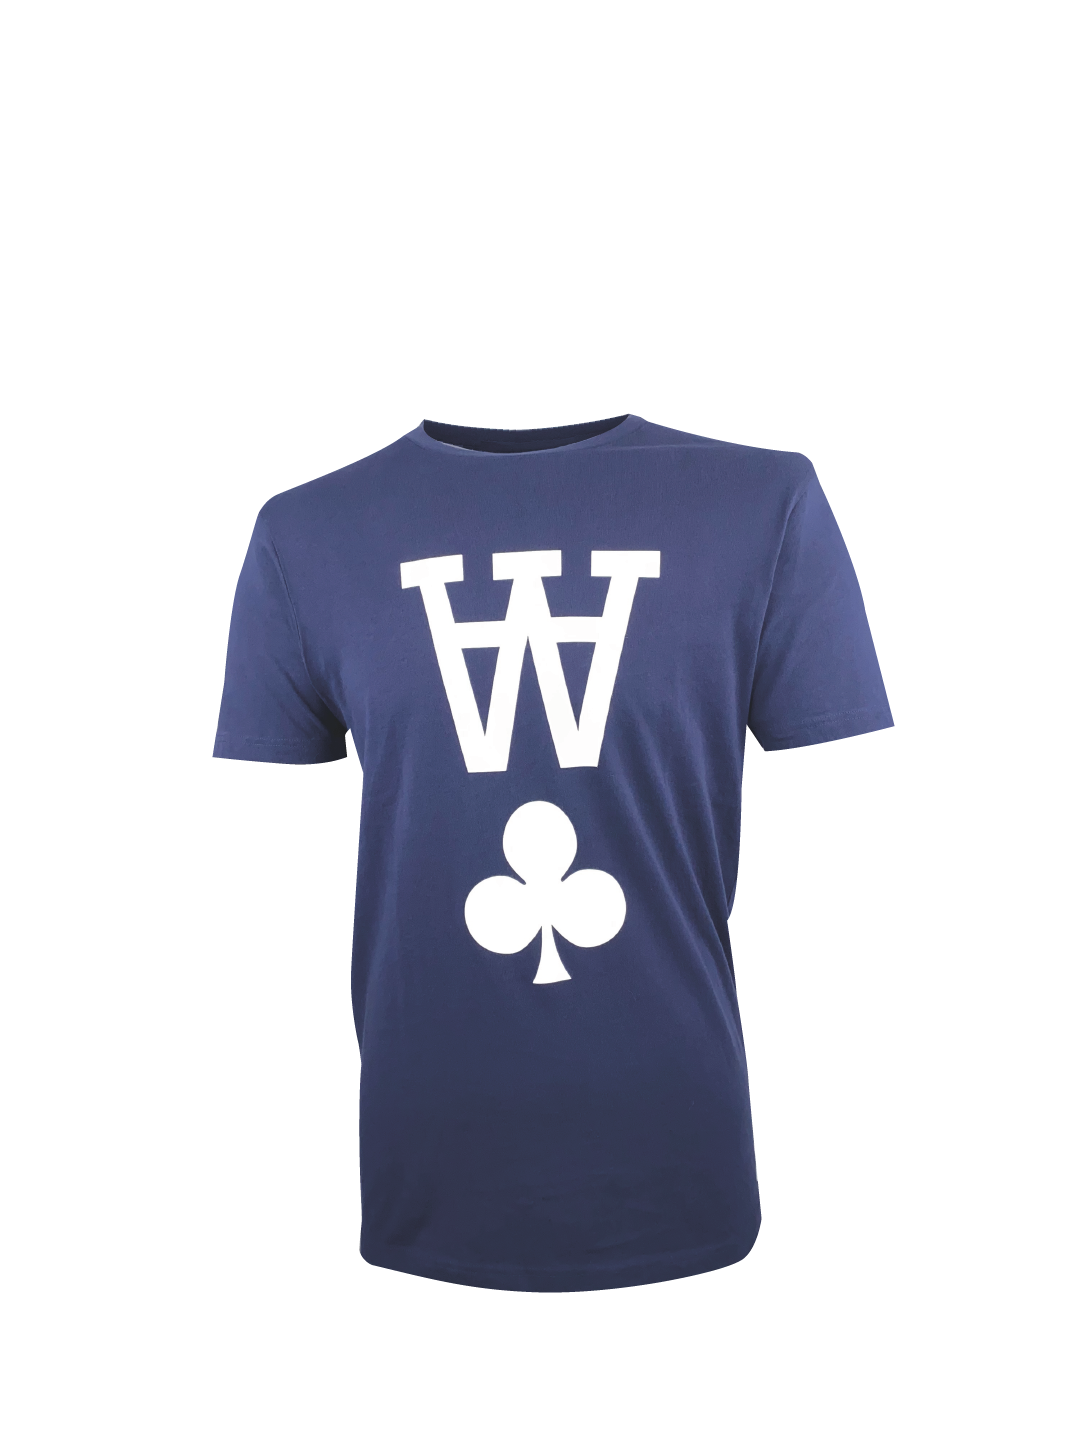 Wood Wood Tee “Double A Pik“ -navy, T-Shirt von der Marke Wood Wood in blau, Streetwear, Dänemark